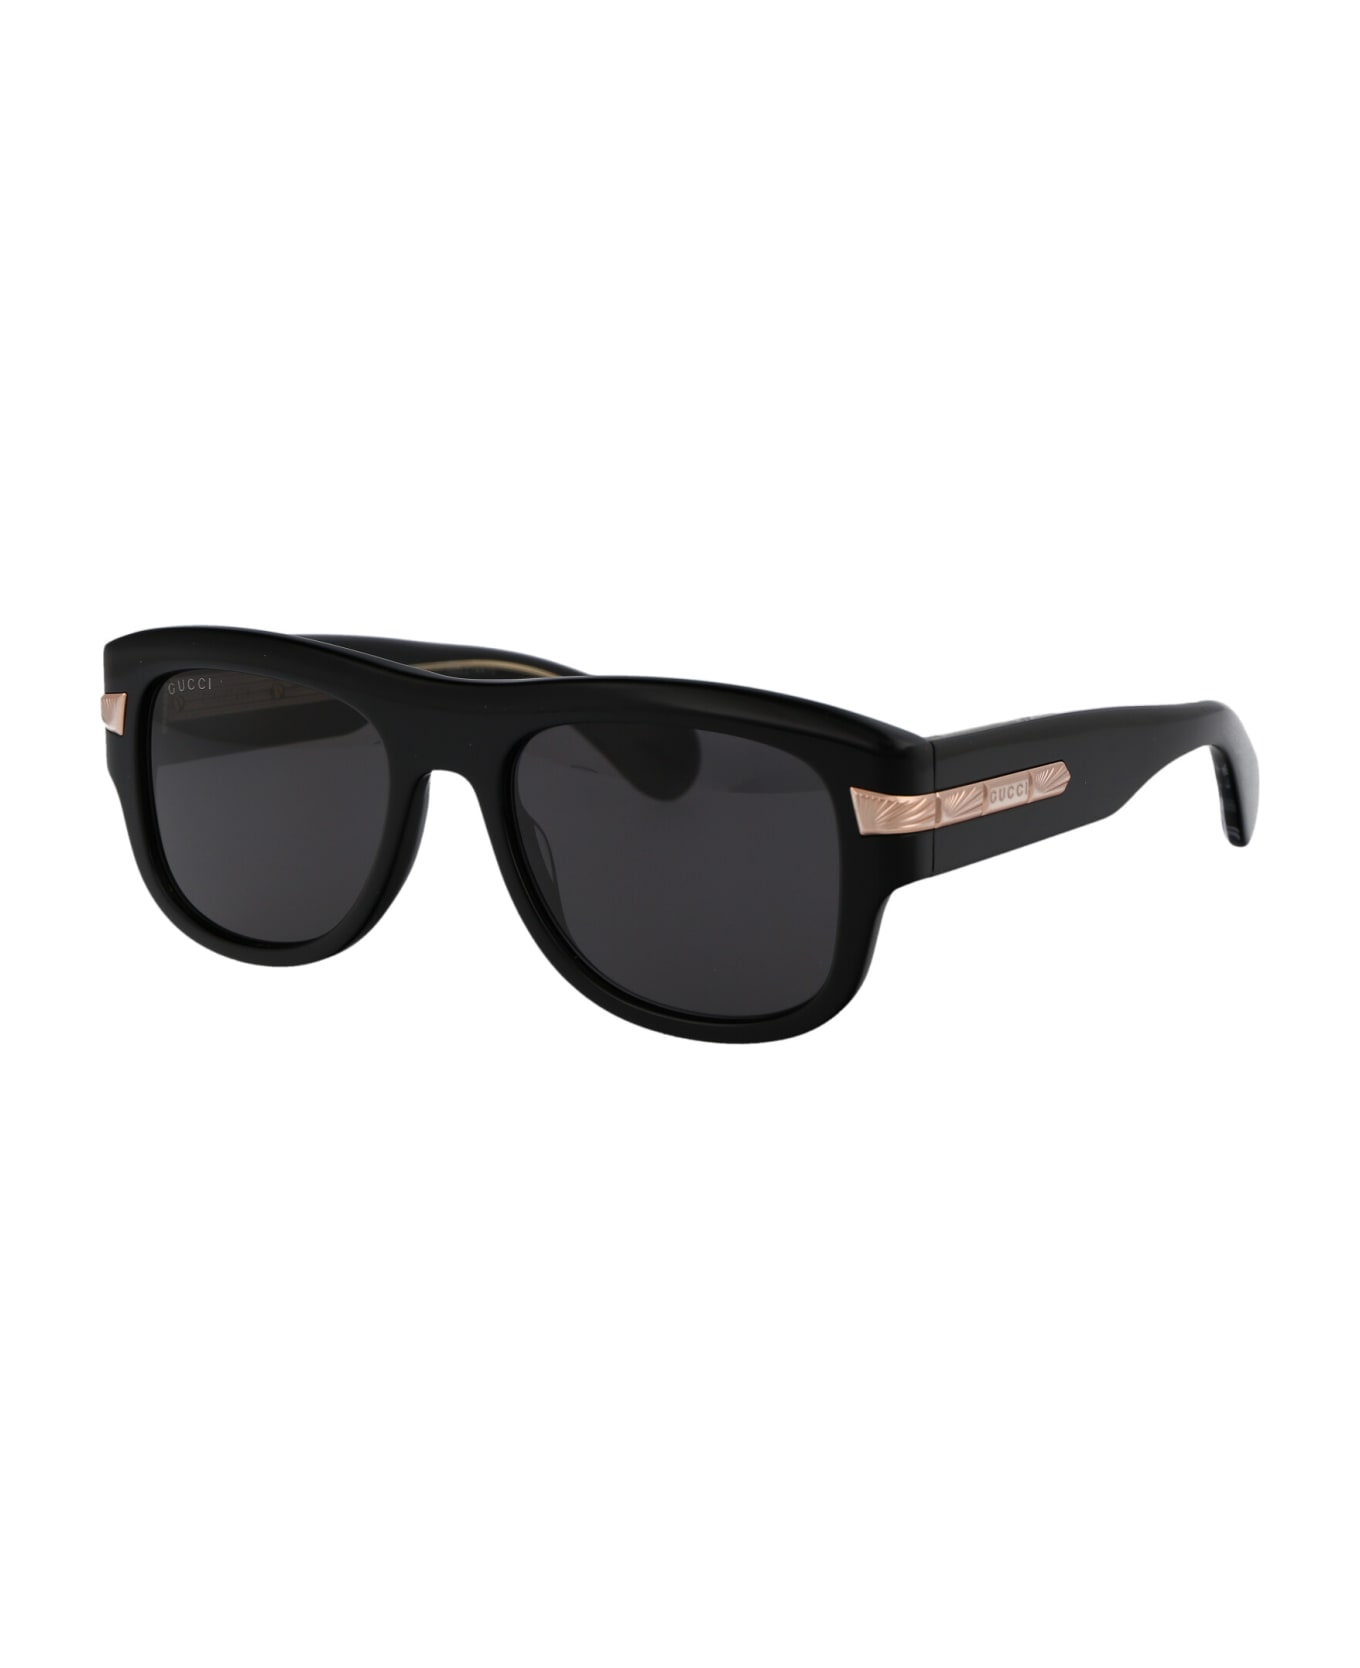 Gucci Eyewear Gg1517s Sunglasses - 001 BLACK BLACK GREY